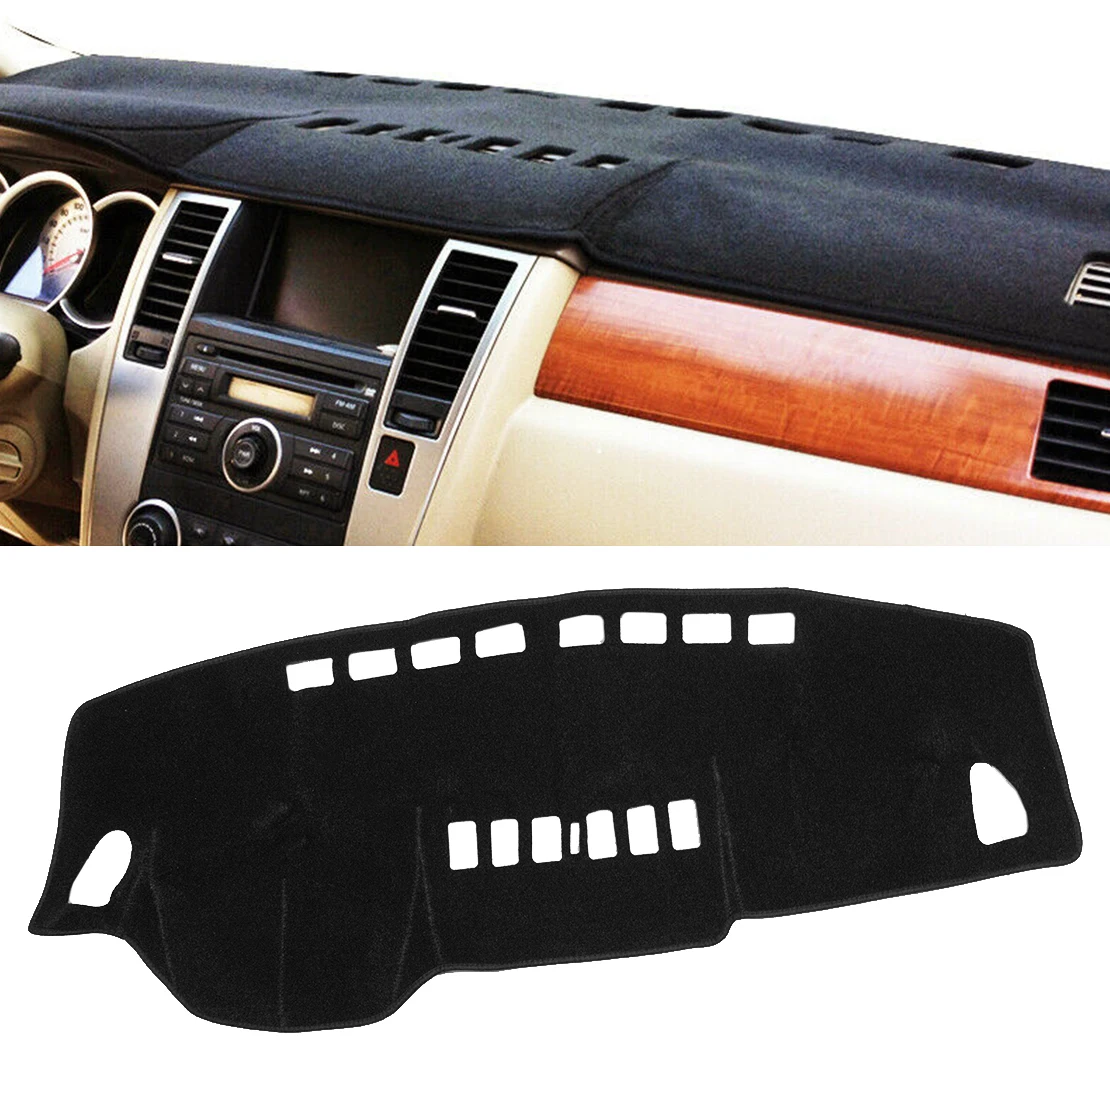 Car Black Dashboard Cover Dash Mat Pad Fit For Nissan Versa Tiida Sedan Hatchback C11 Left Hand Drive